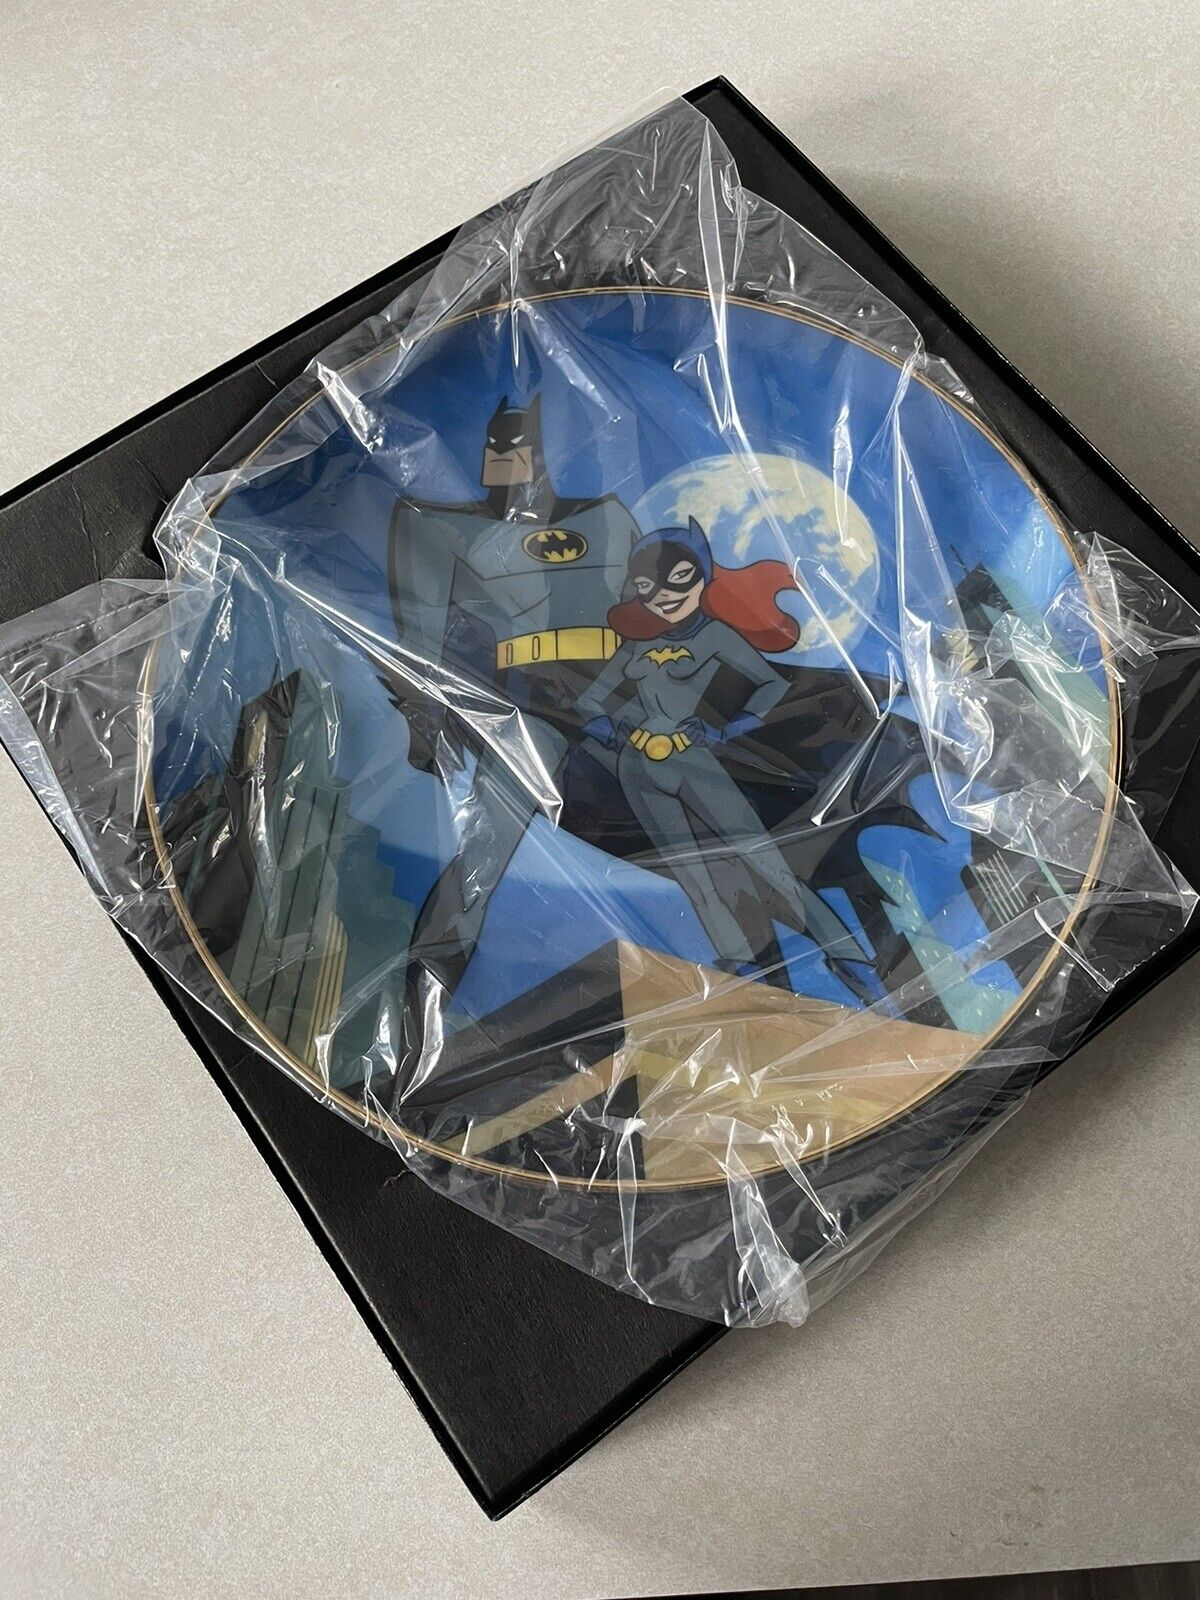 Warner bros Batman and Batgirl Collector Plate